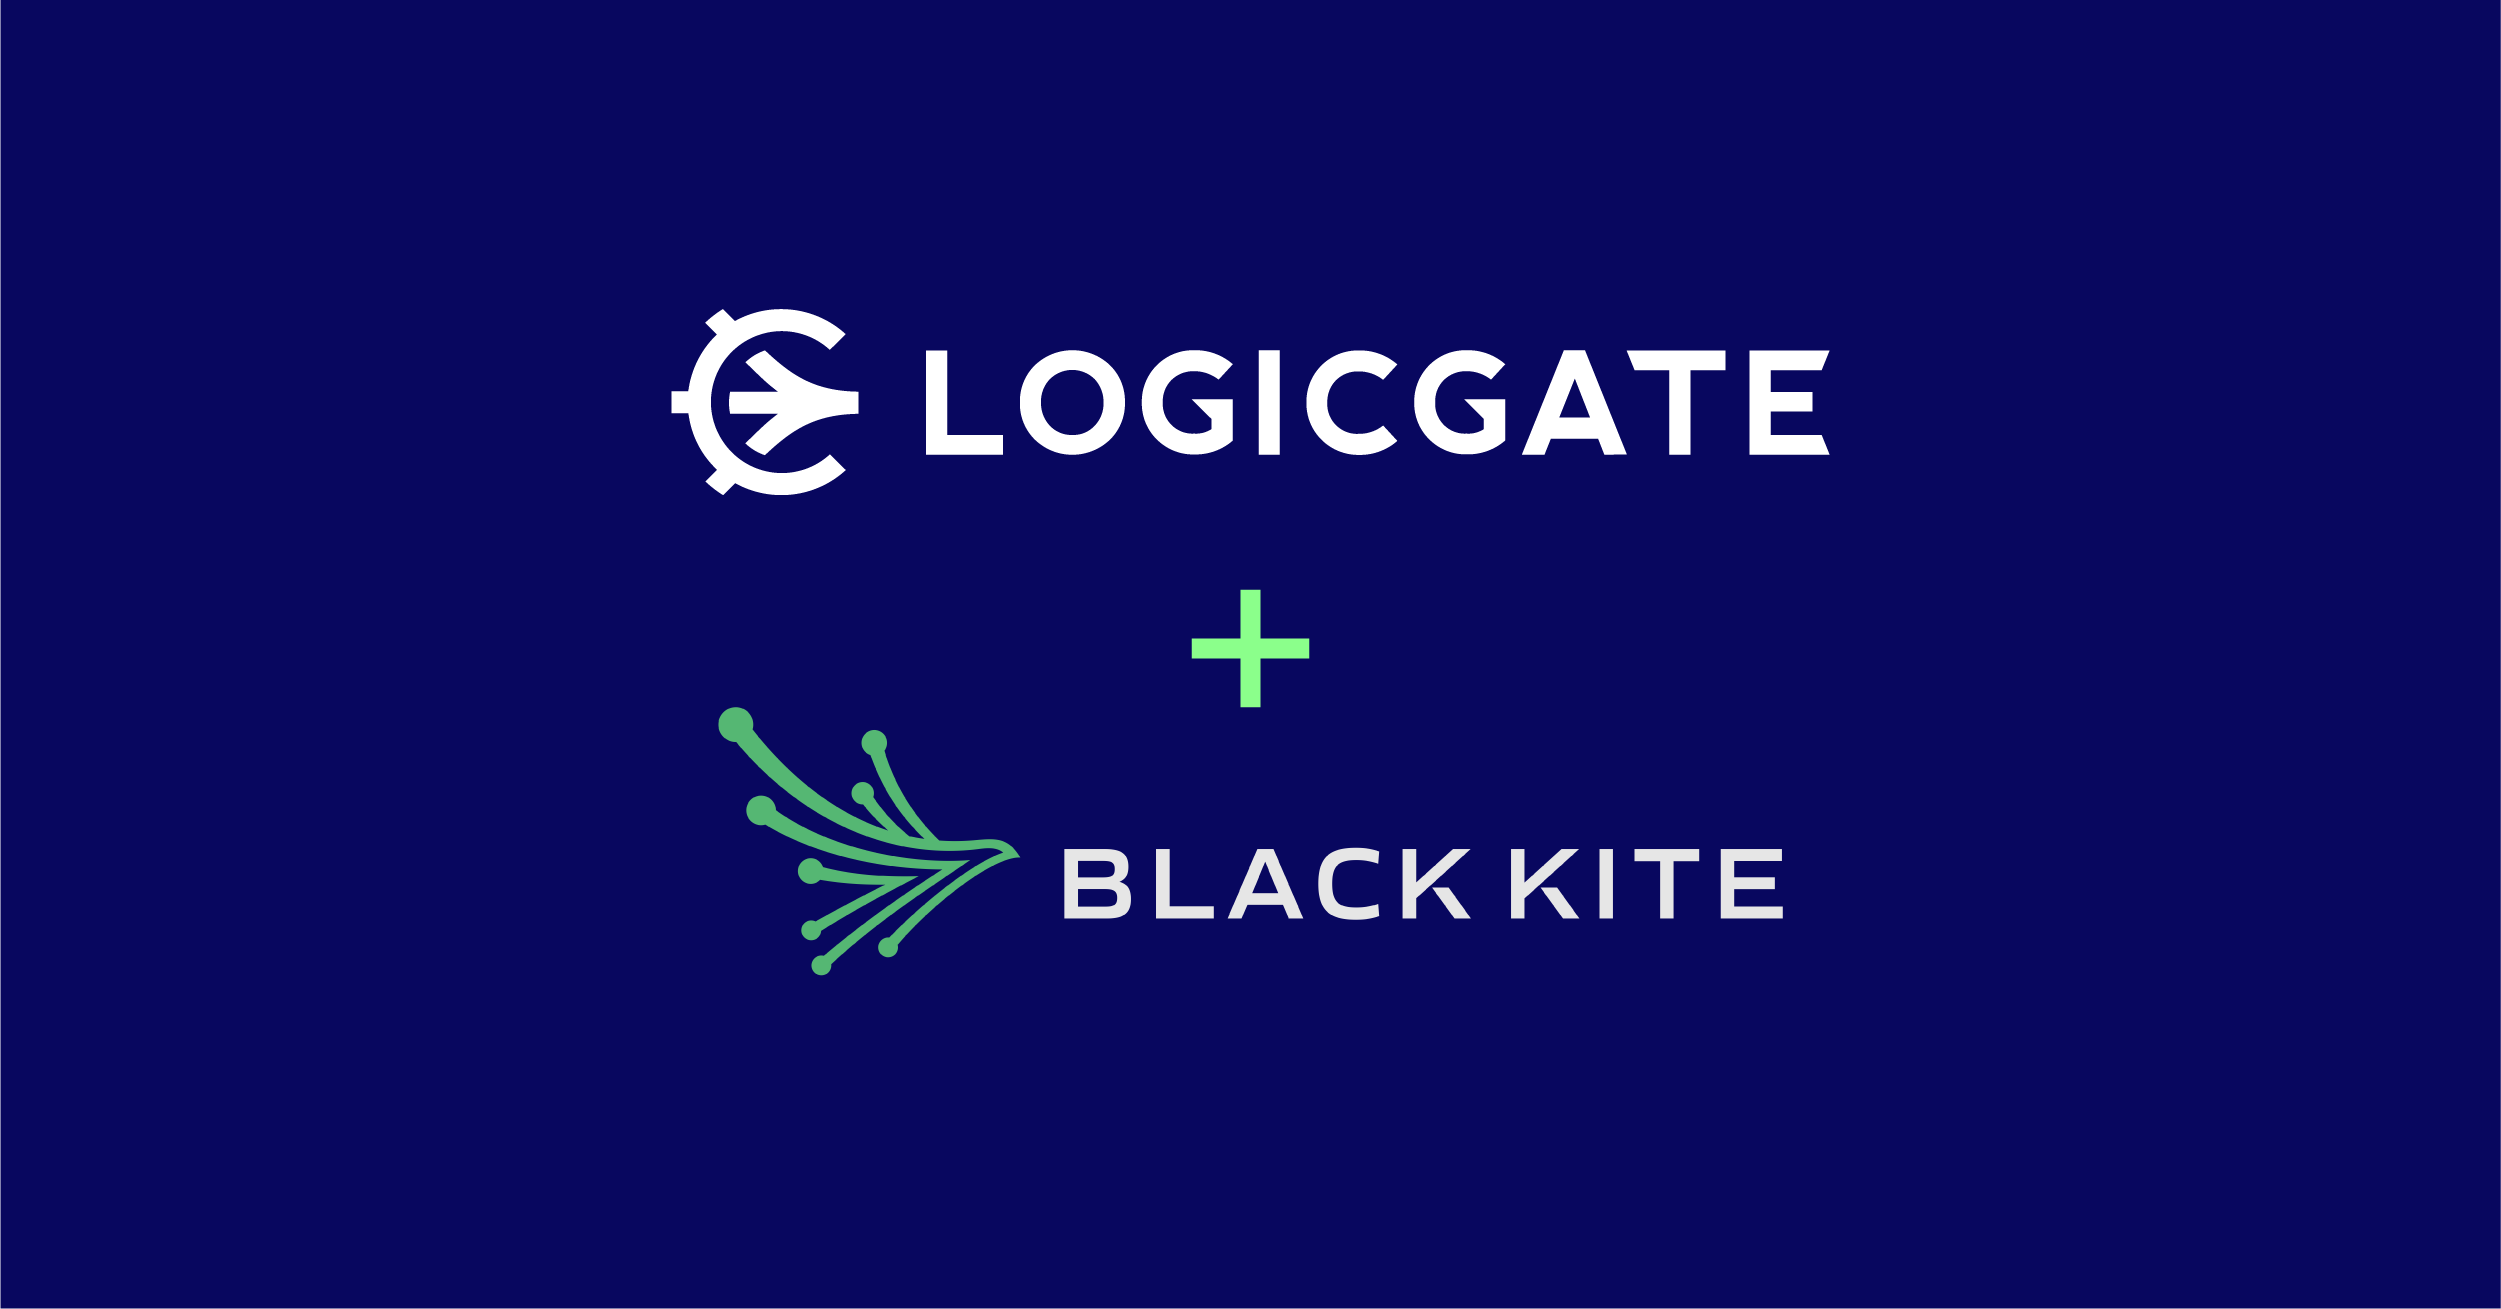 LogicGate and Black Kite